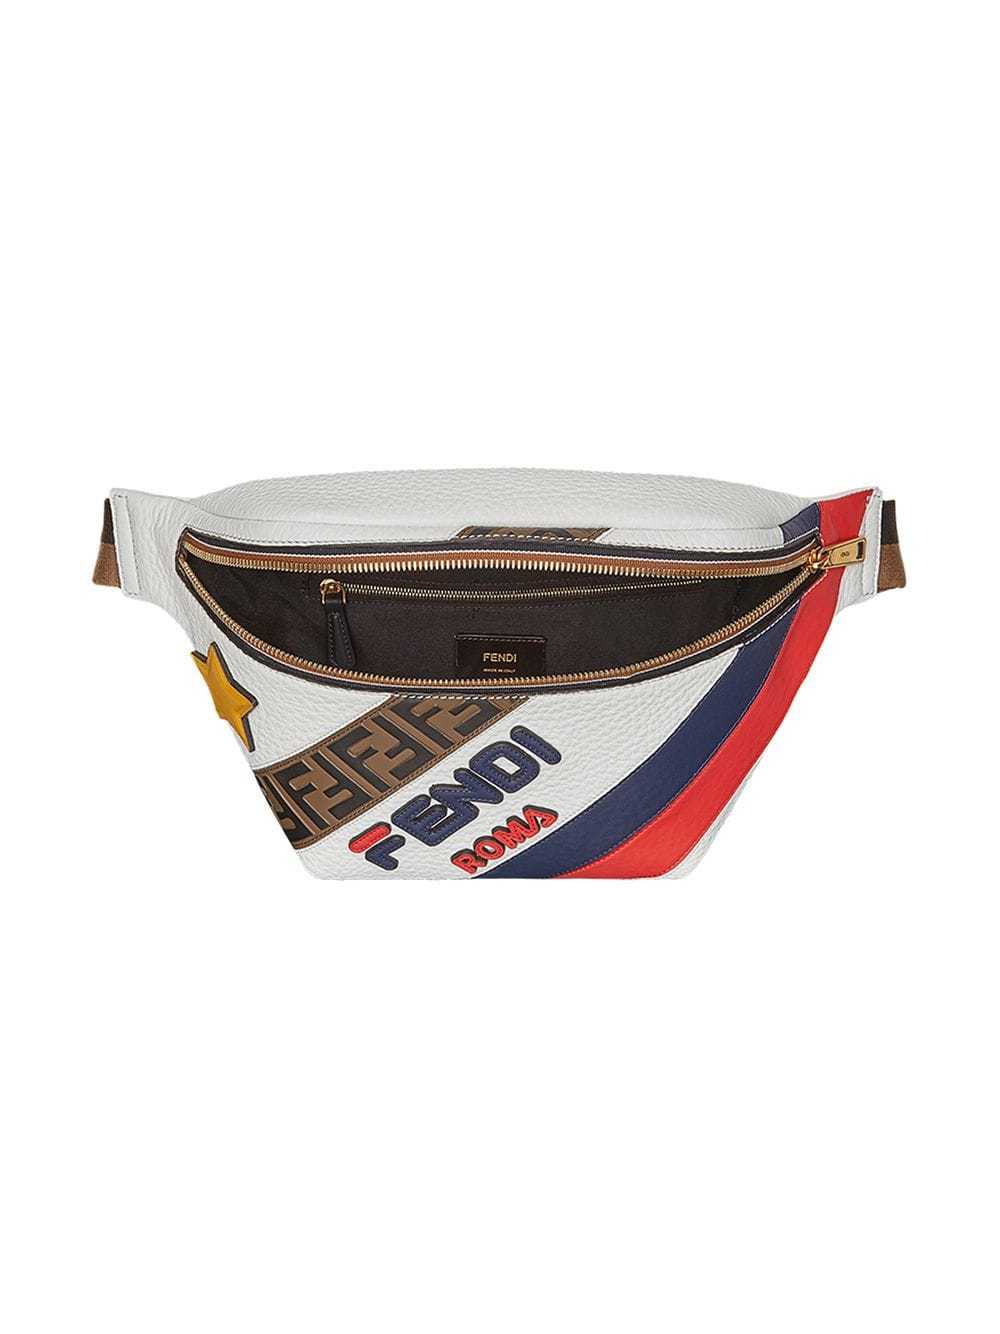 Fendi Mania Panelled Belt Bag, $1,521 